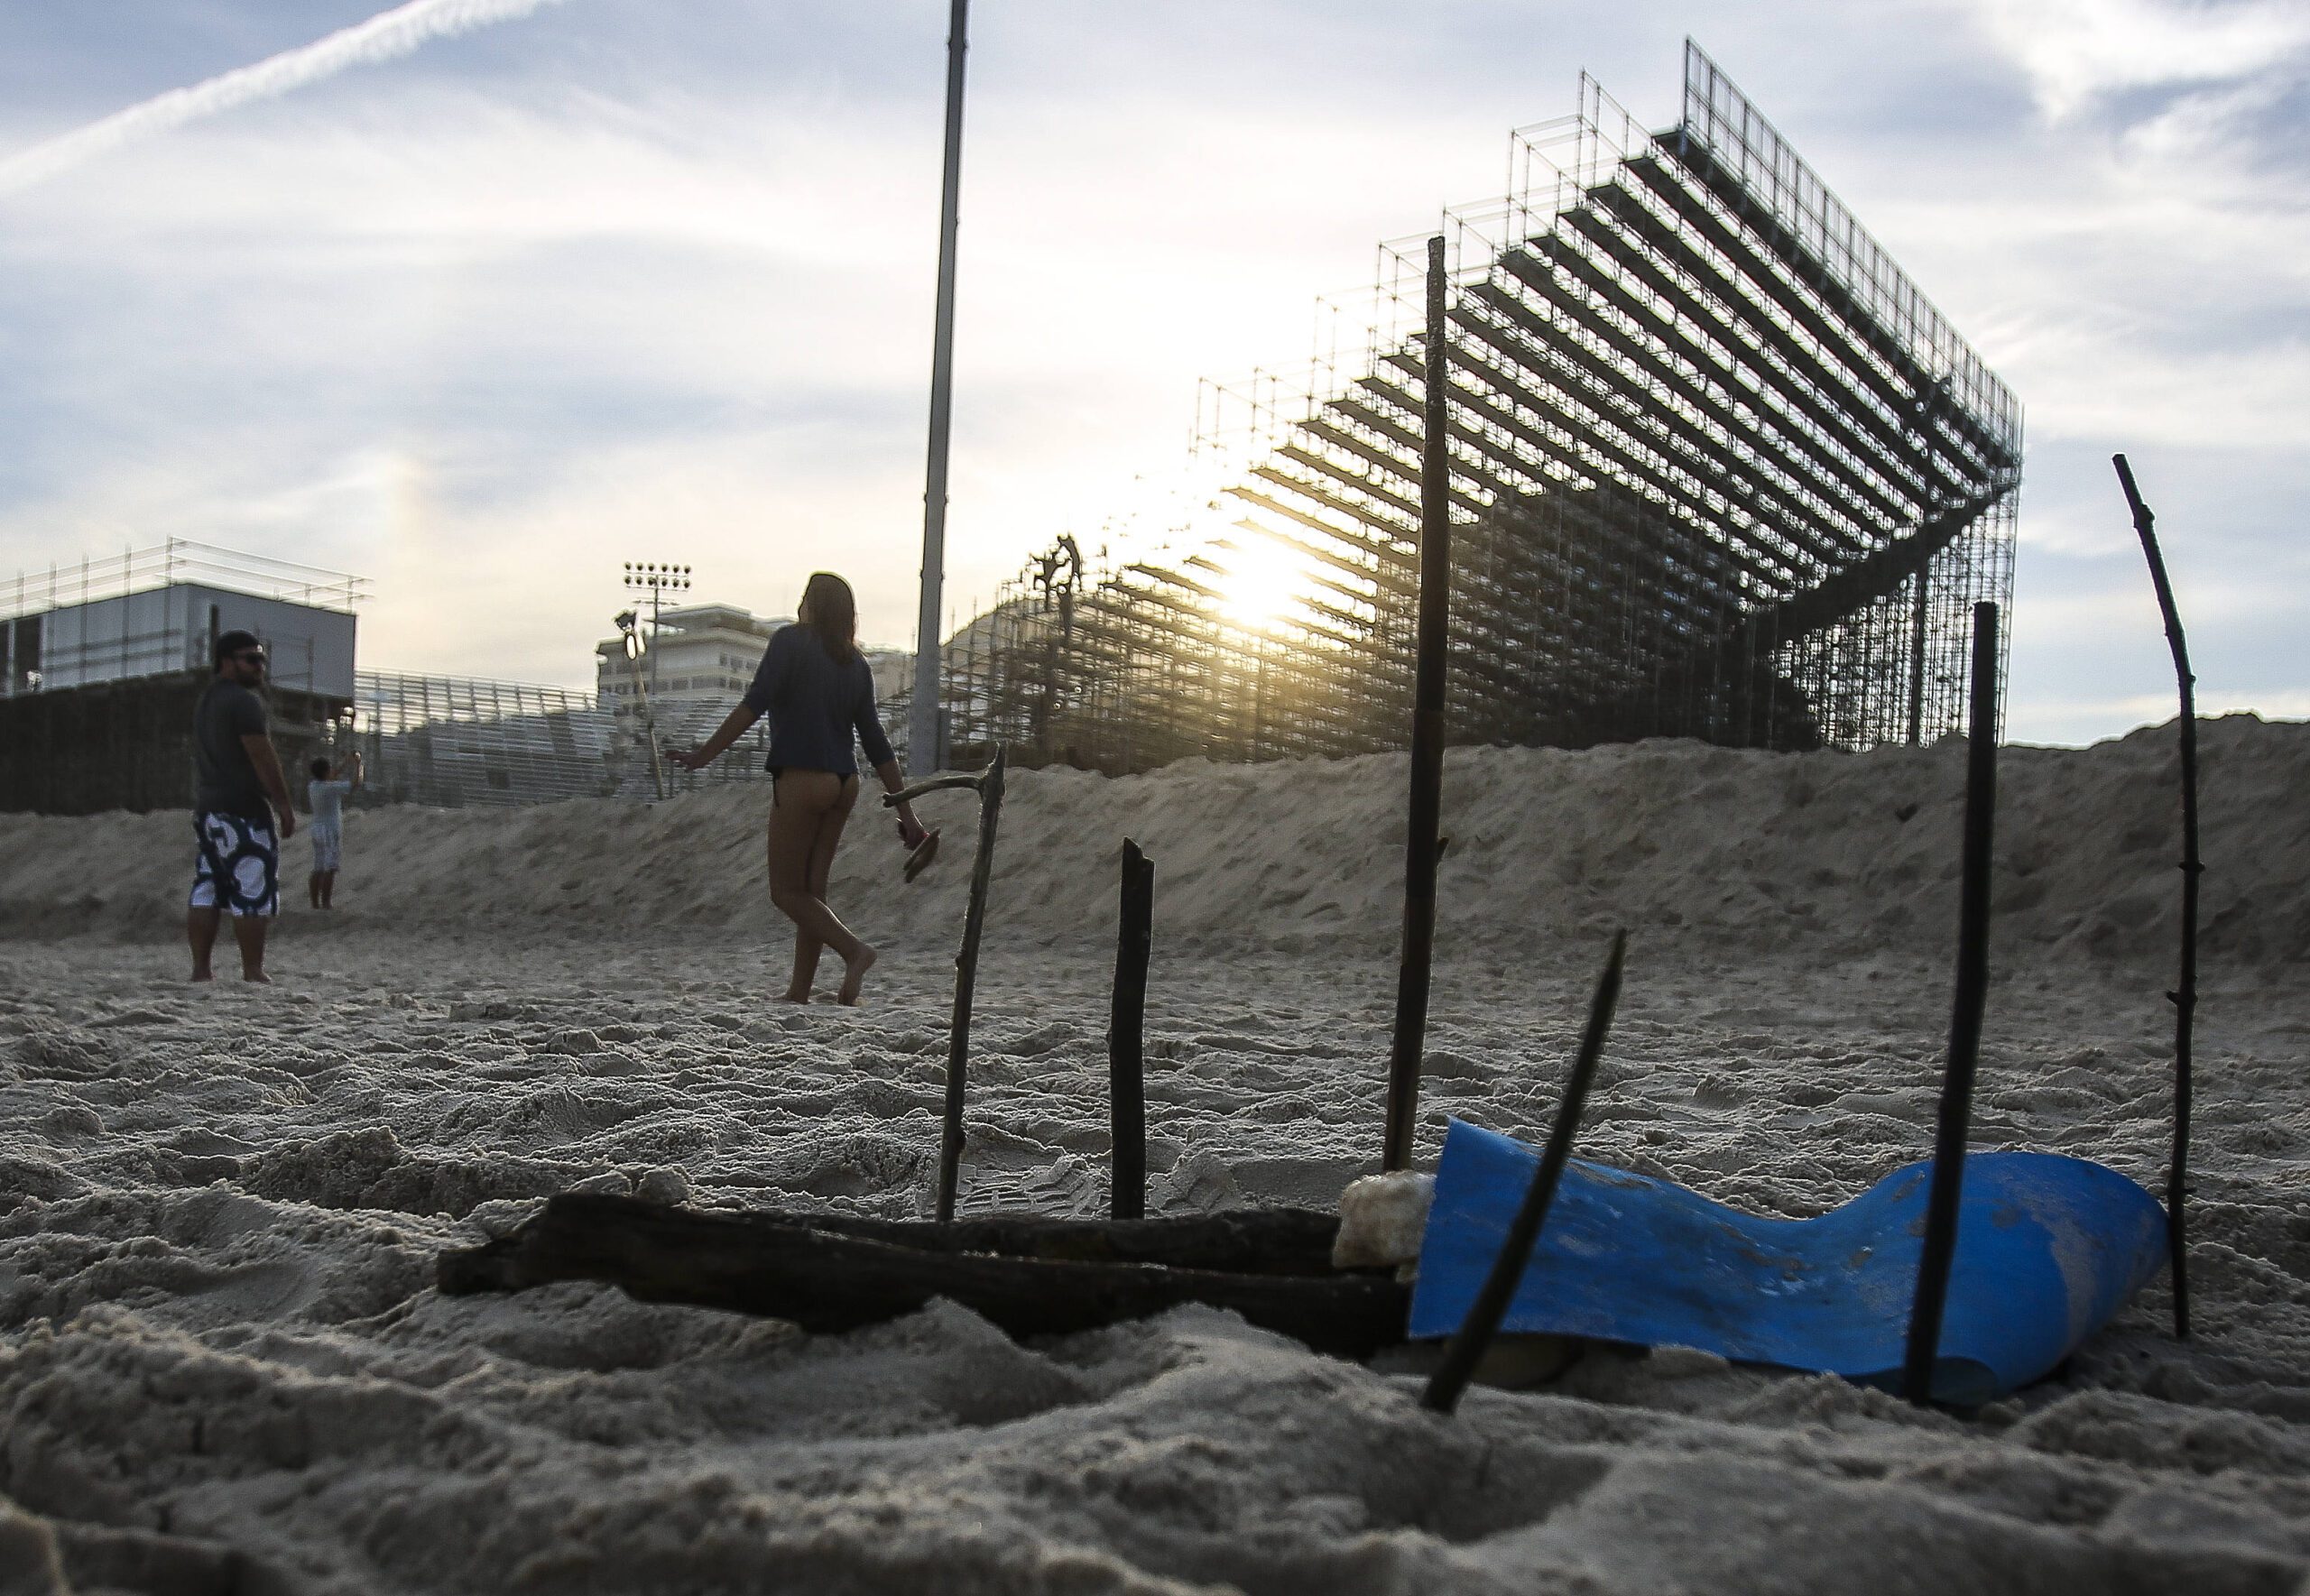 Potongan tubuh ditemukan di pantai Rio de Janeiro jelang Olimpiade